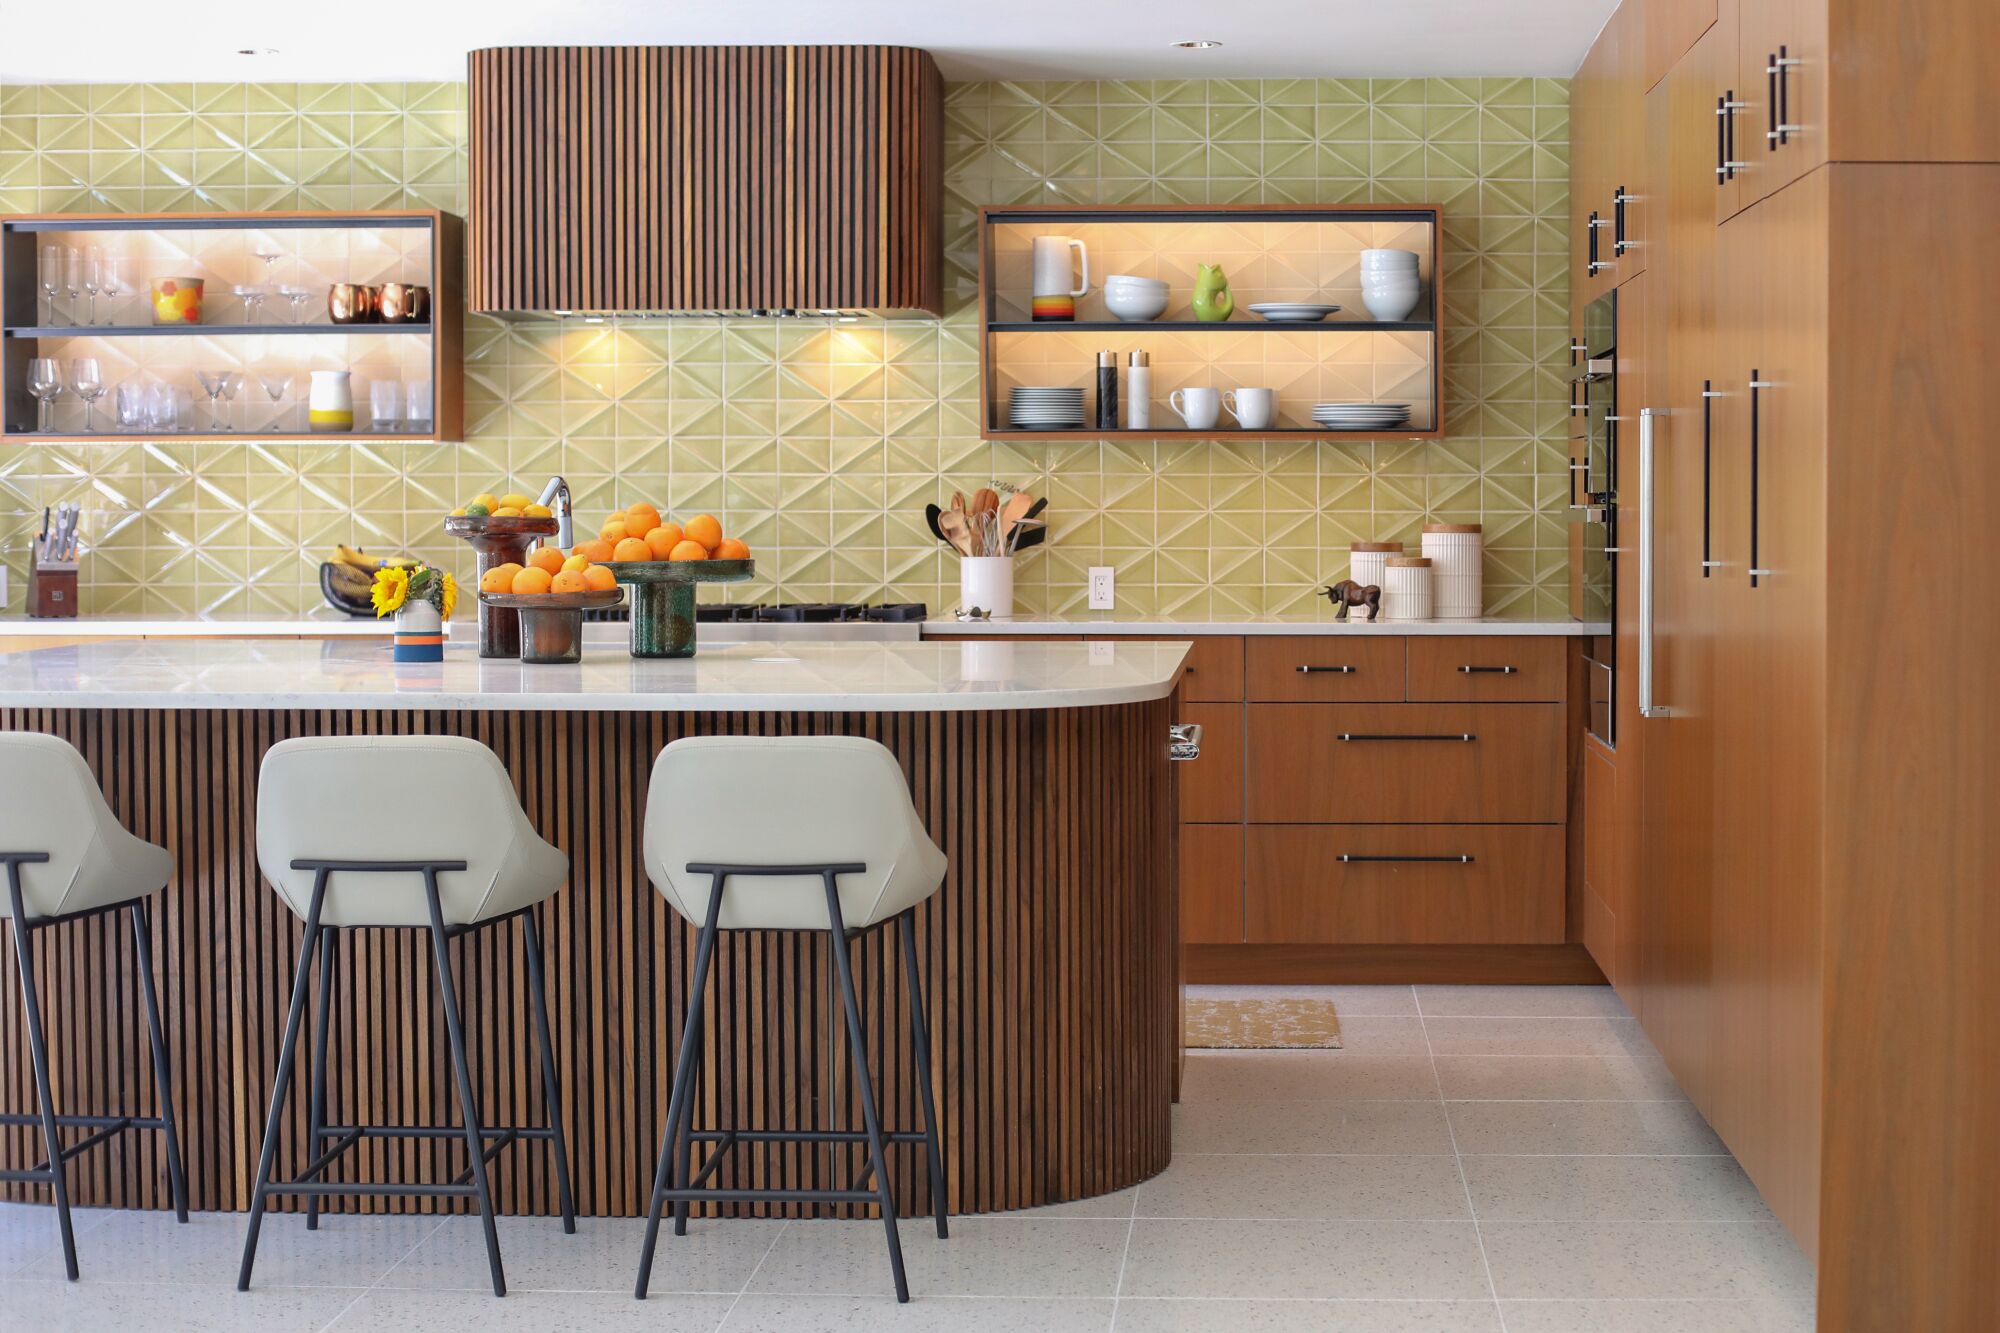 A kitchen with a green tile backsplash